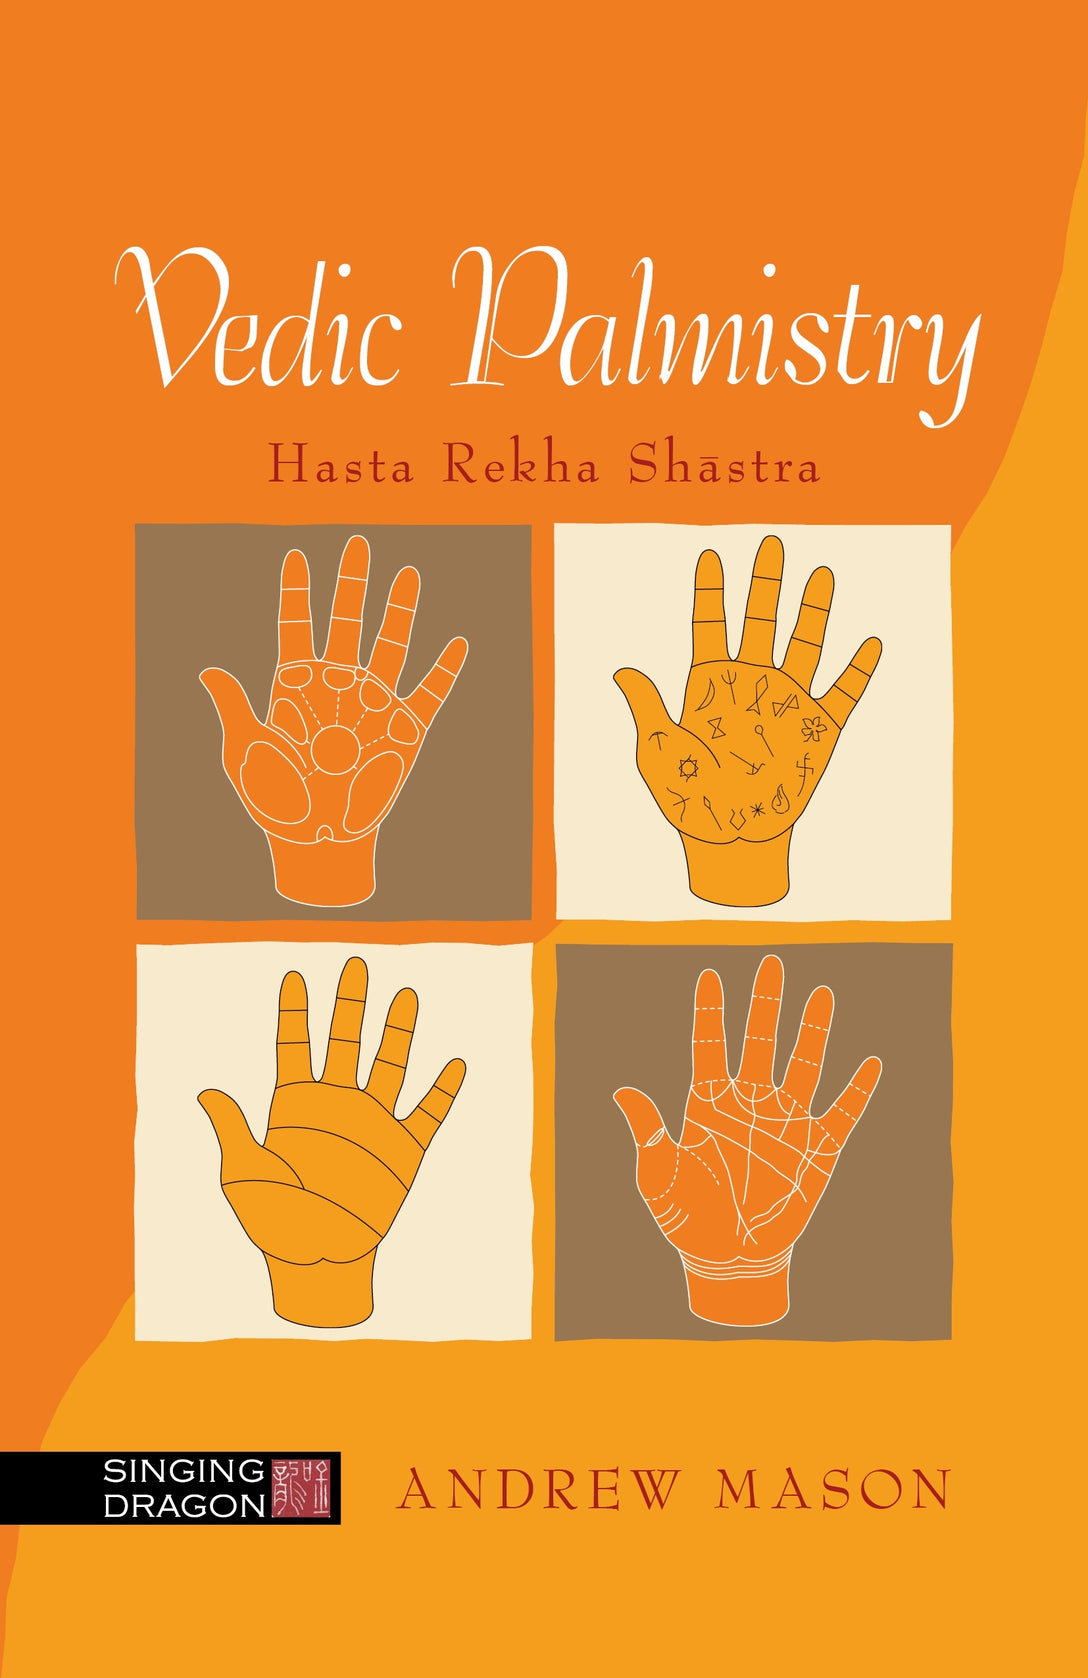 Vedic Palmistry by Andrew Mason